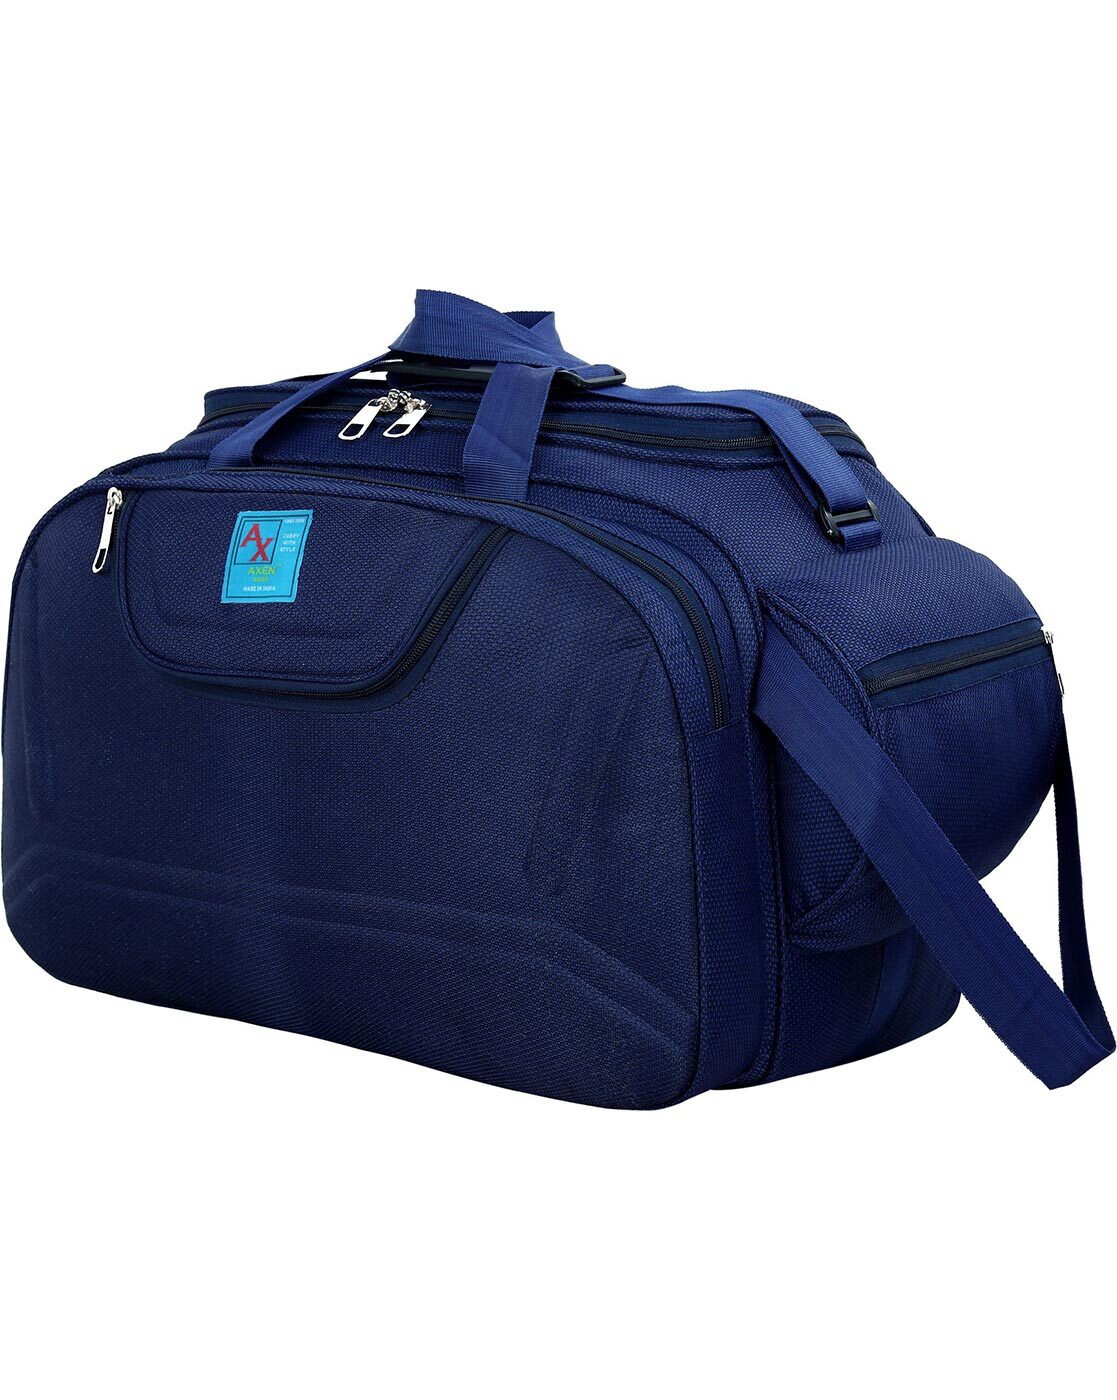 Duffle Bag India  Leather Duffle Bags Cabin Bags Weekend Bags  Monza  Bags